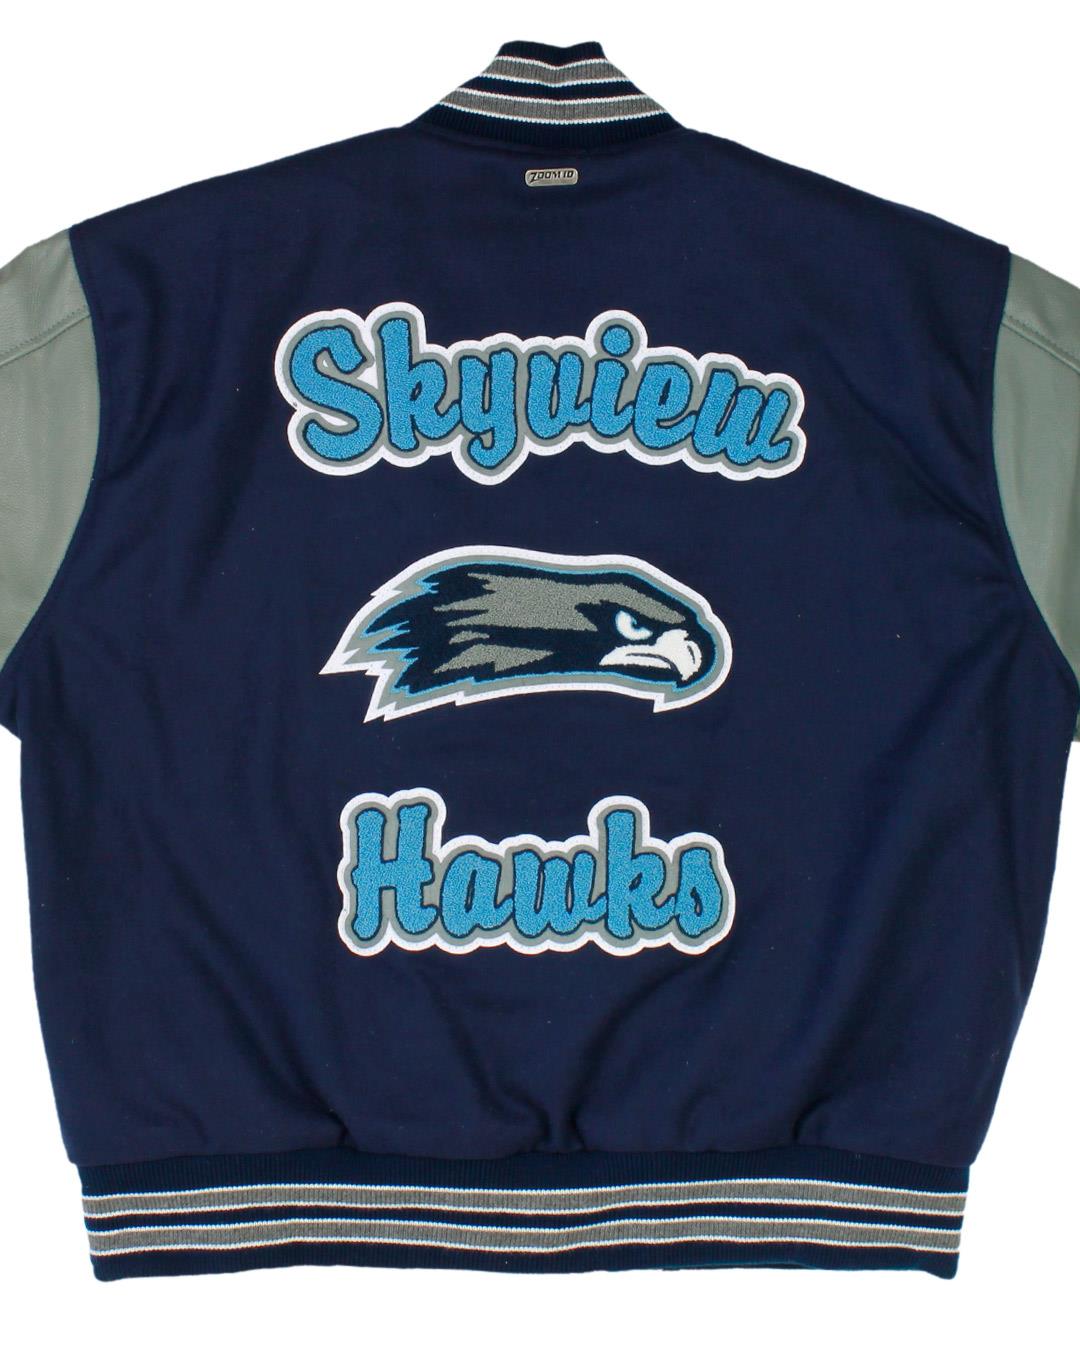 Skyview High School Letterman Jacket, Nampa ID - Back